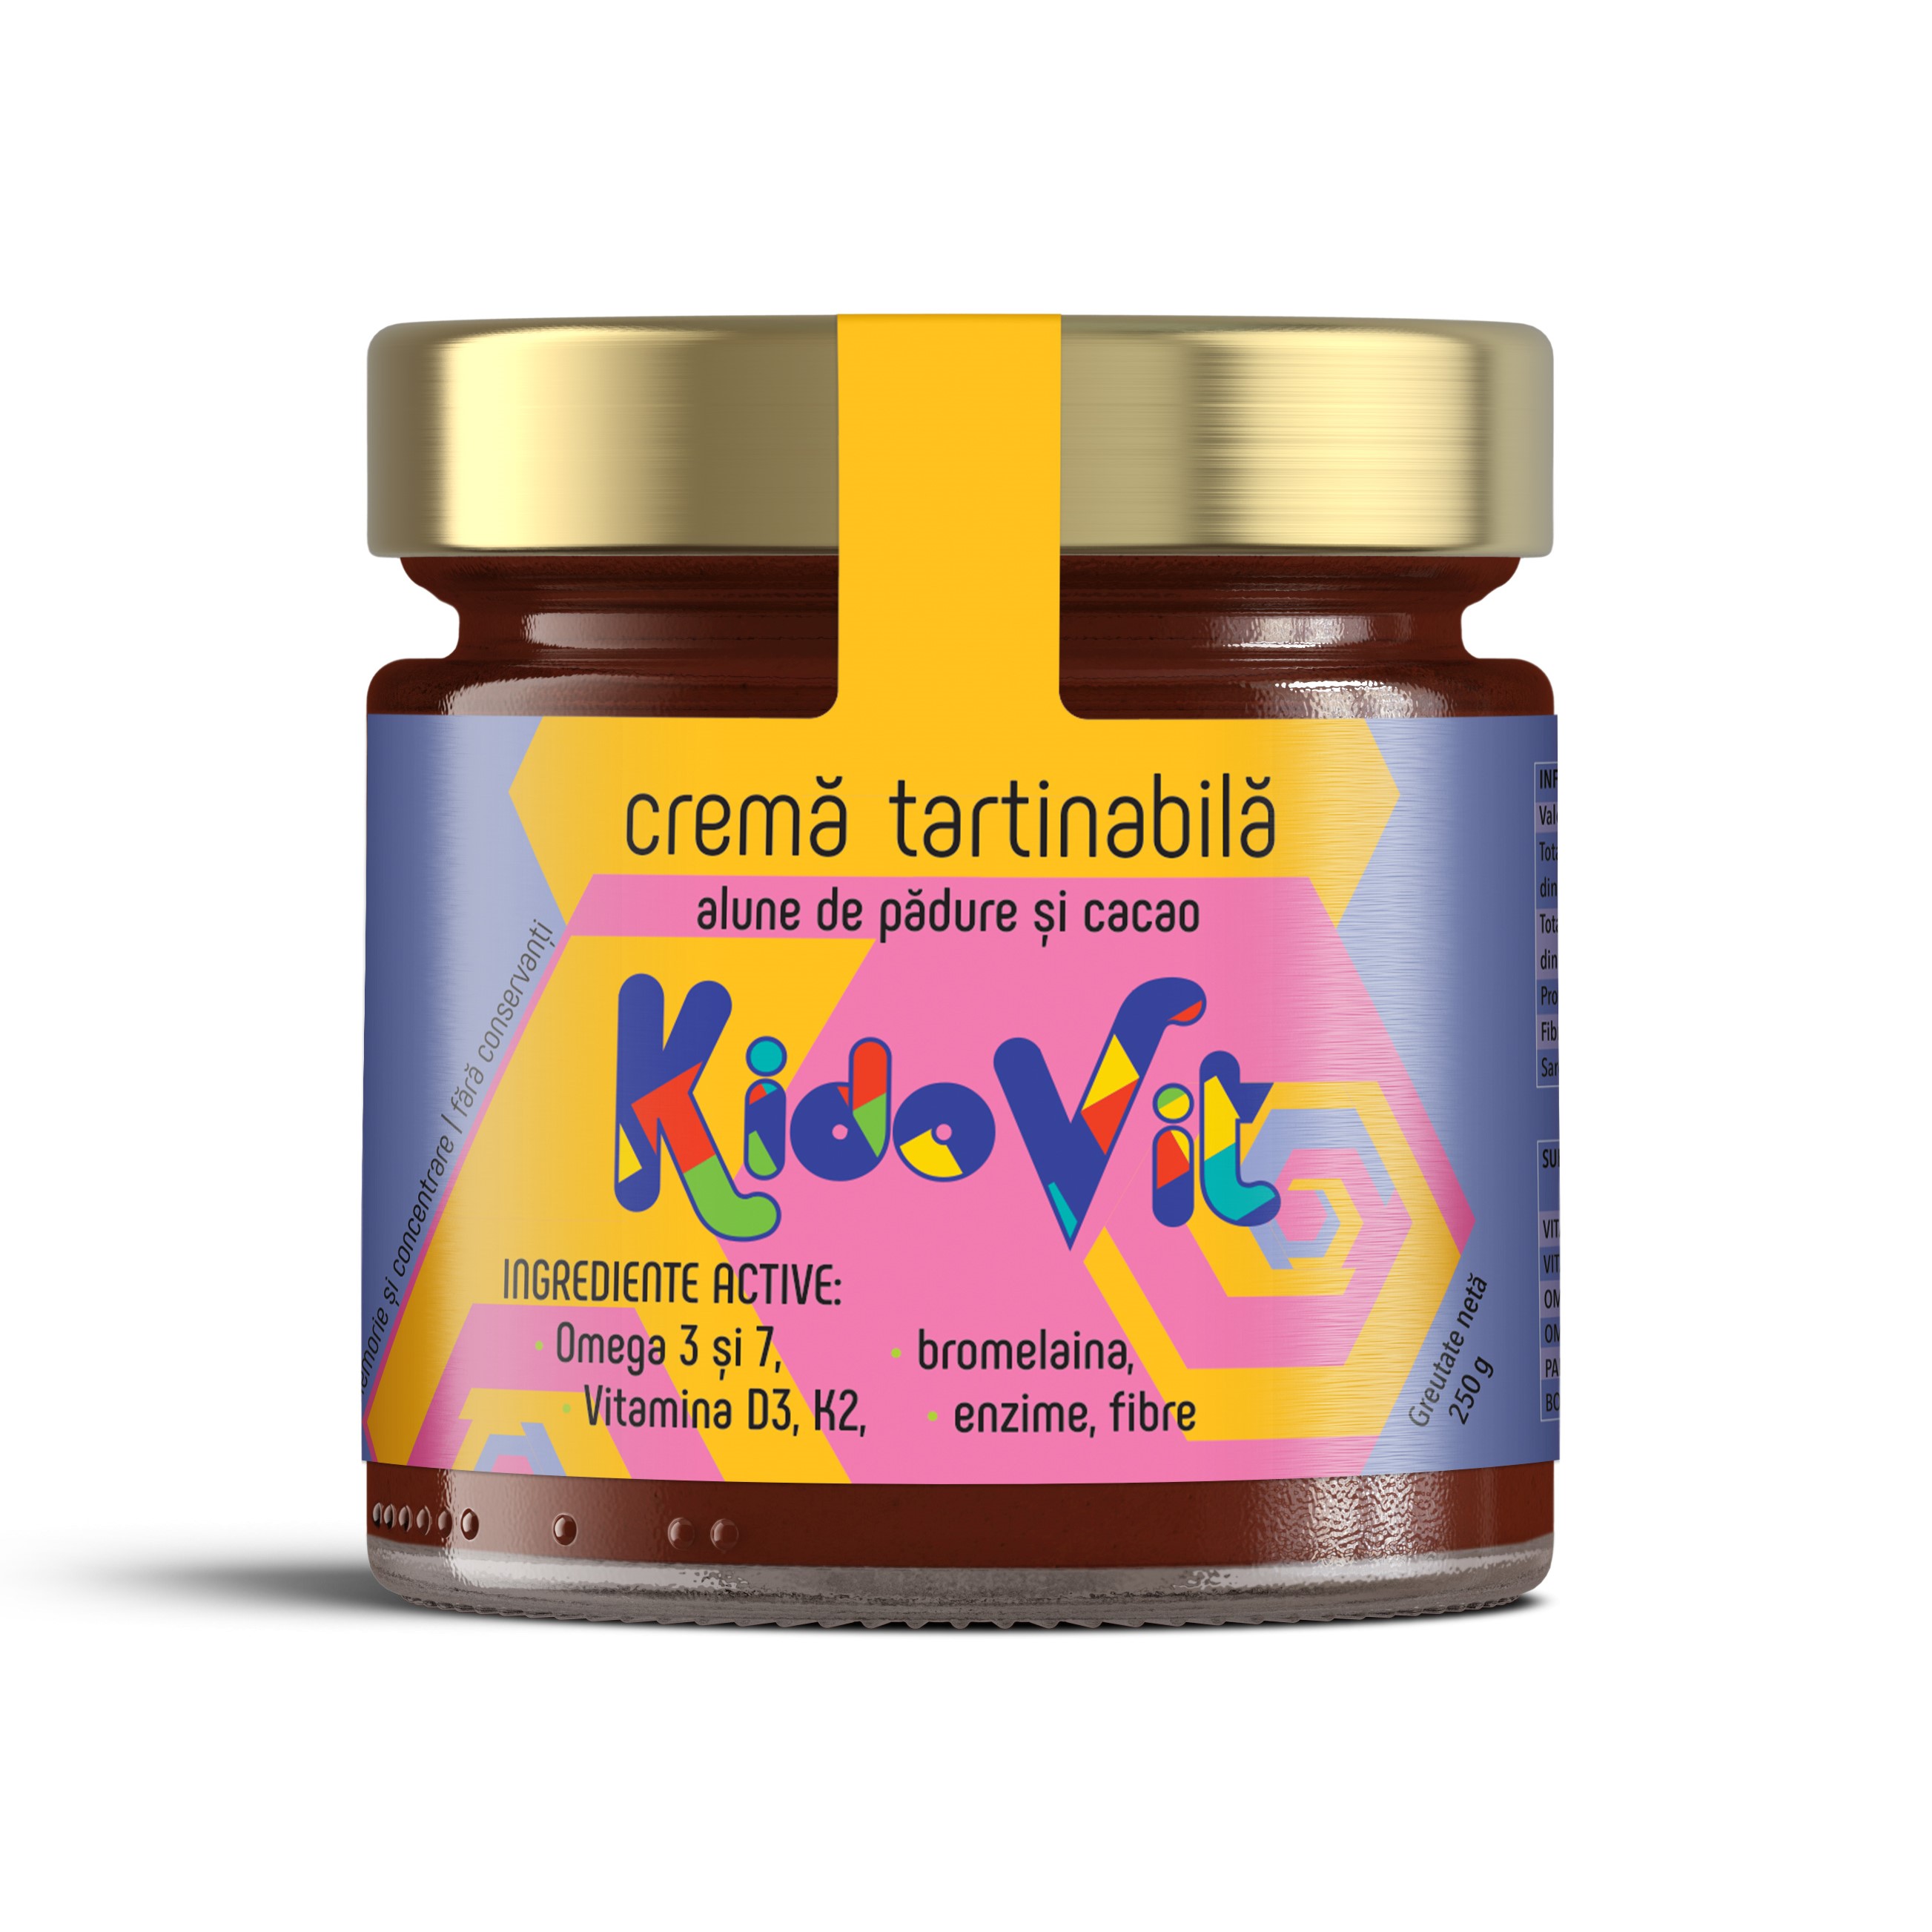 Crema tartinabila din cacao, alune de pădure,ananas, KidoVit, 250 g, Remedia